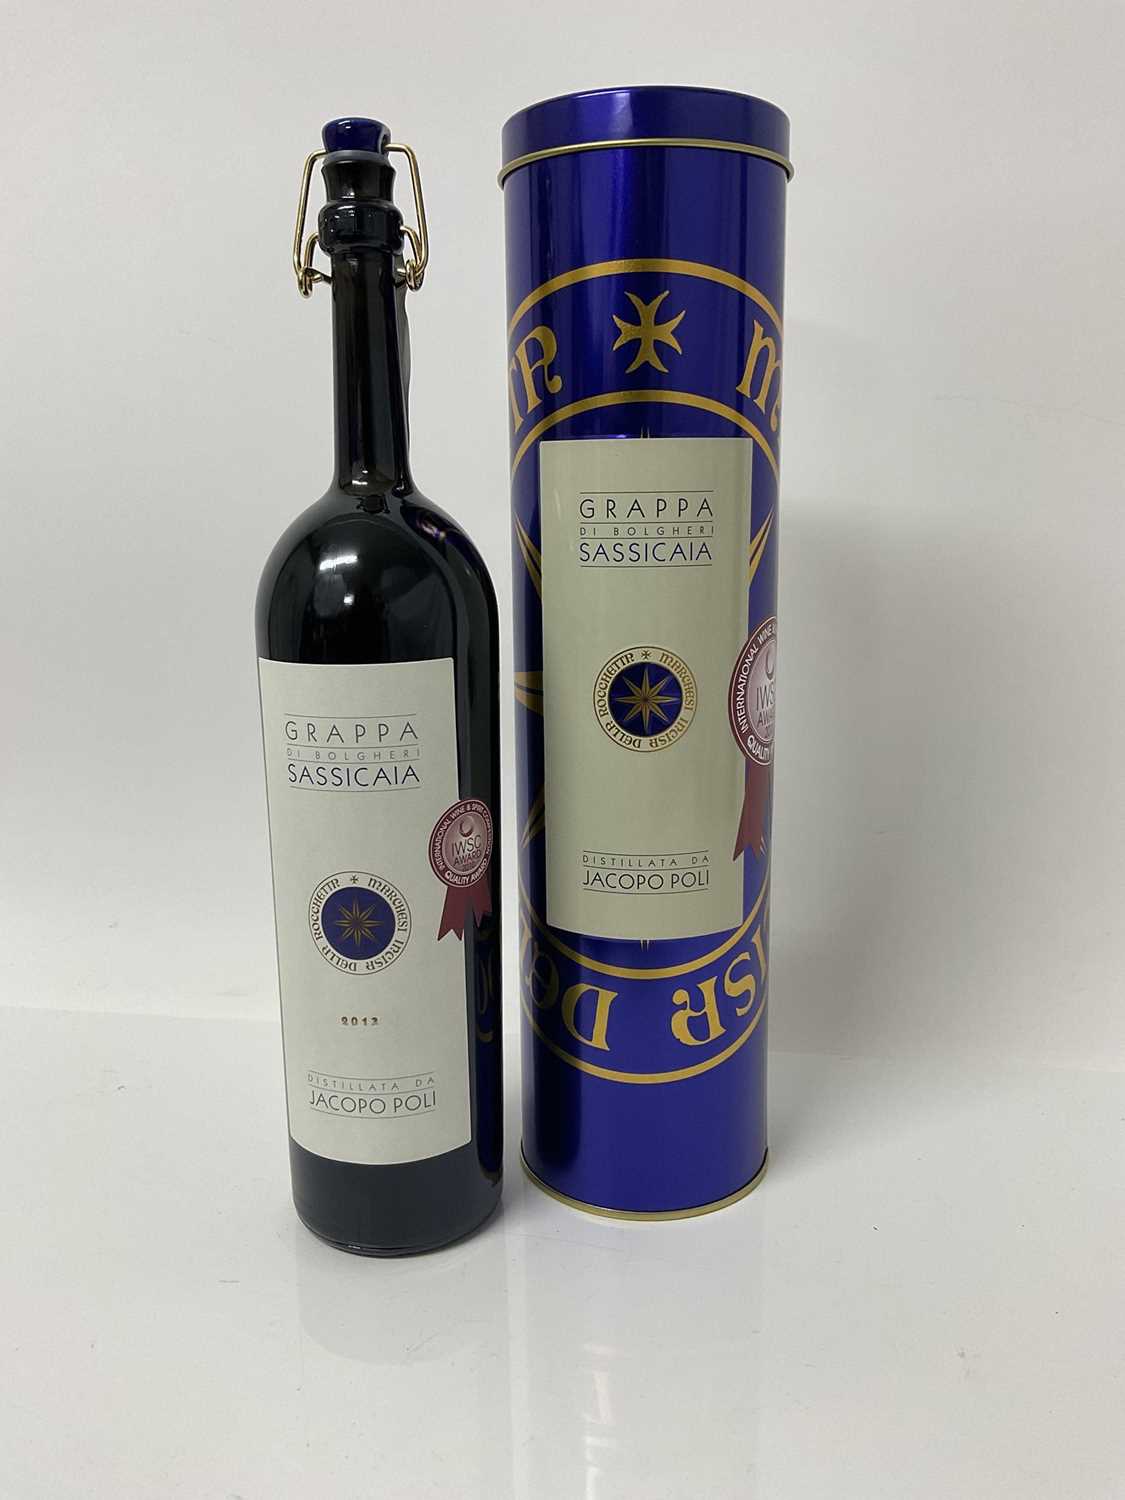 Lot 18 - Grappa - one bottle, Di Bolgheri Sassicaia 2013, Jacopo Poli, in original tin case